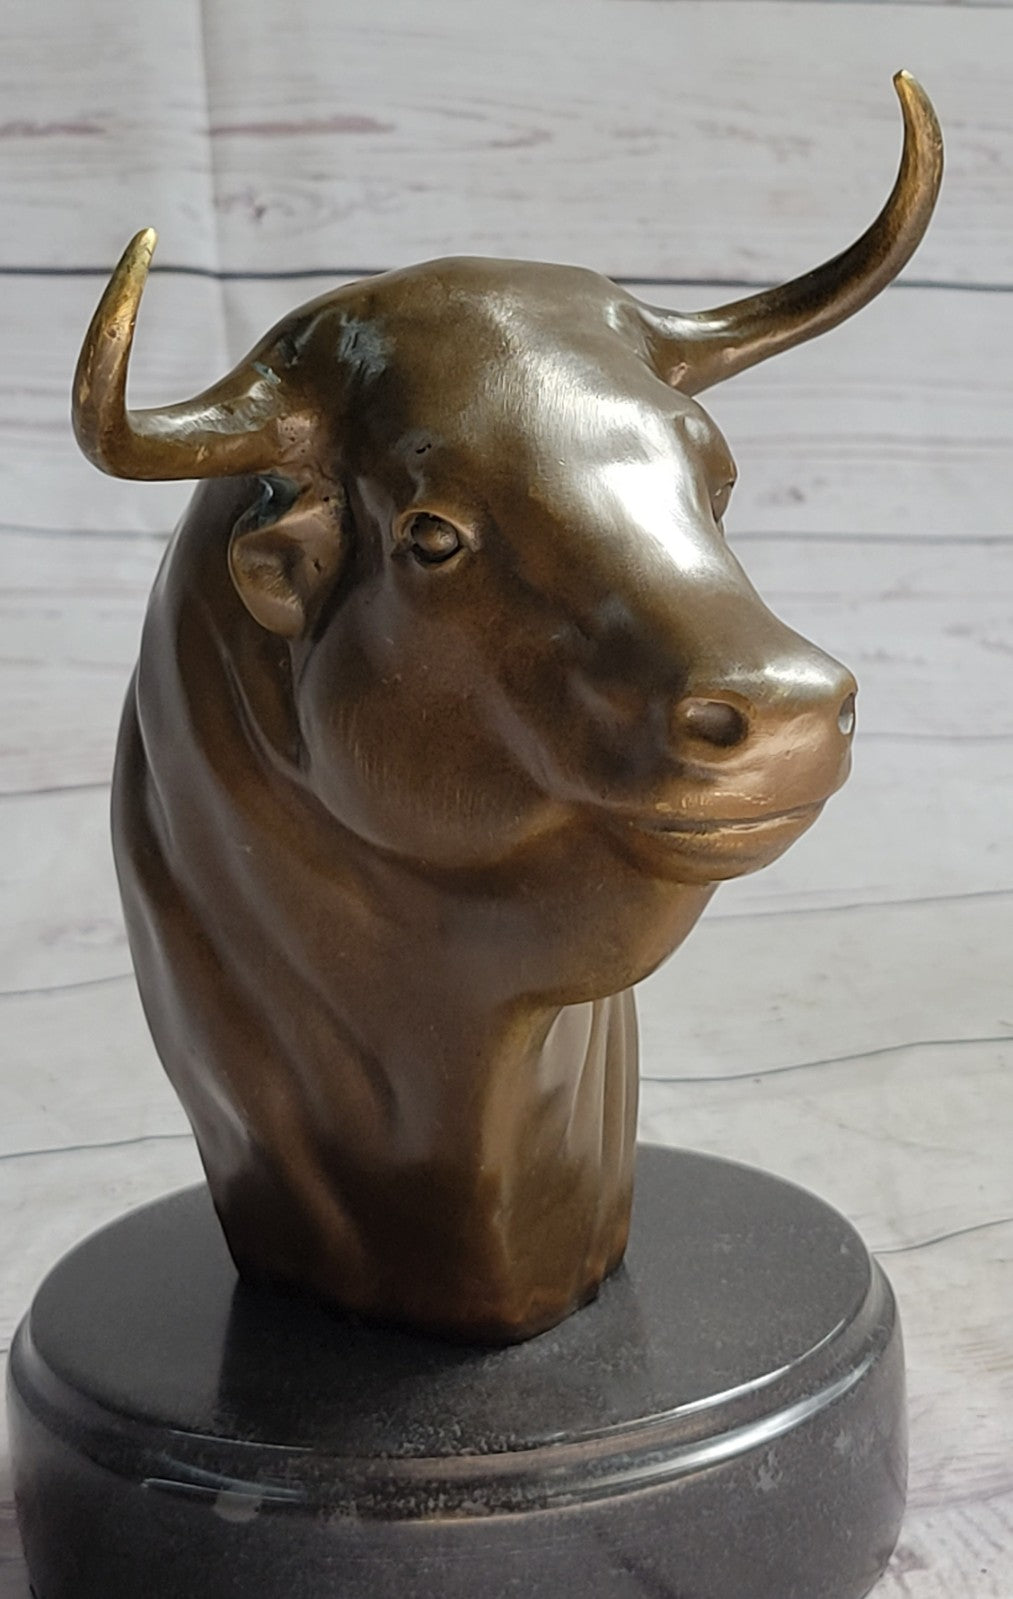 Stock Market Bull Bust - Wall Street Real Bronze Statue Figurine 8.5"H Lost Wax